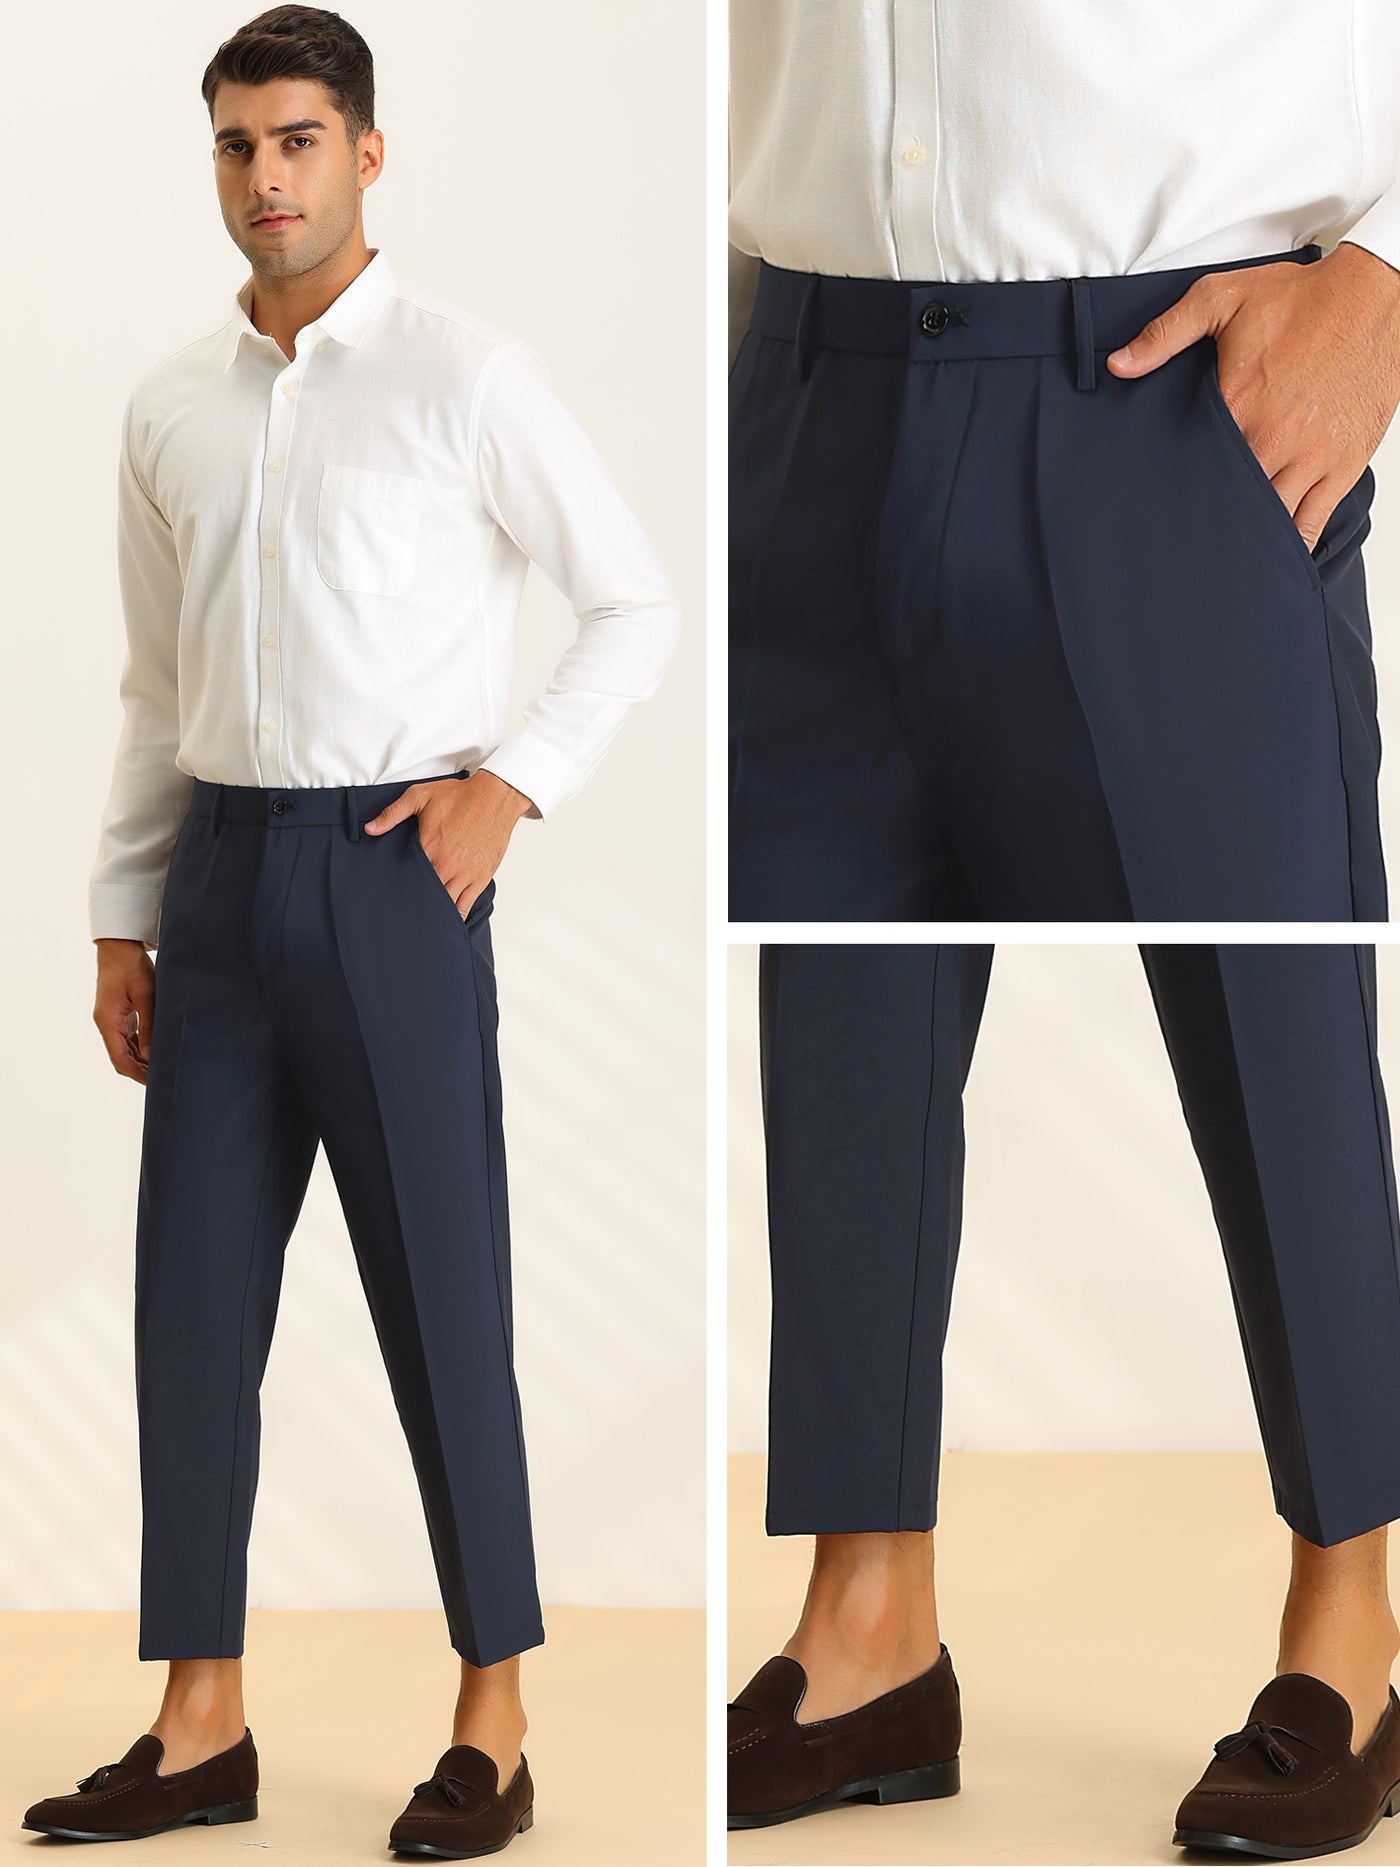 Bublédon Ankle Length Business Slim Fit Flat Front Work Cropped Dress Pants